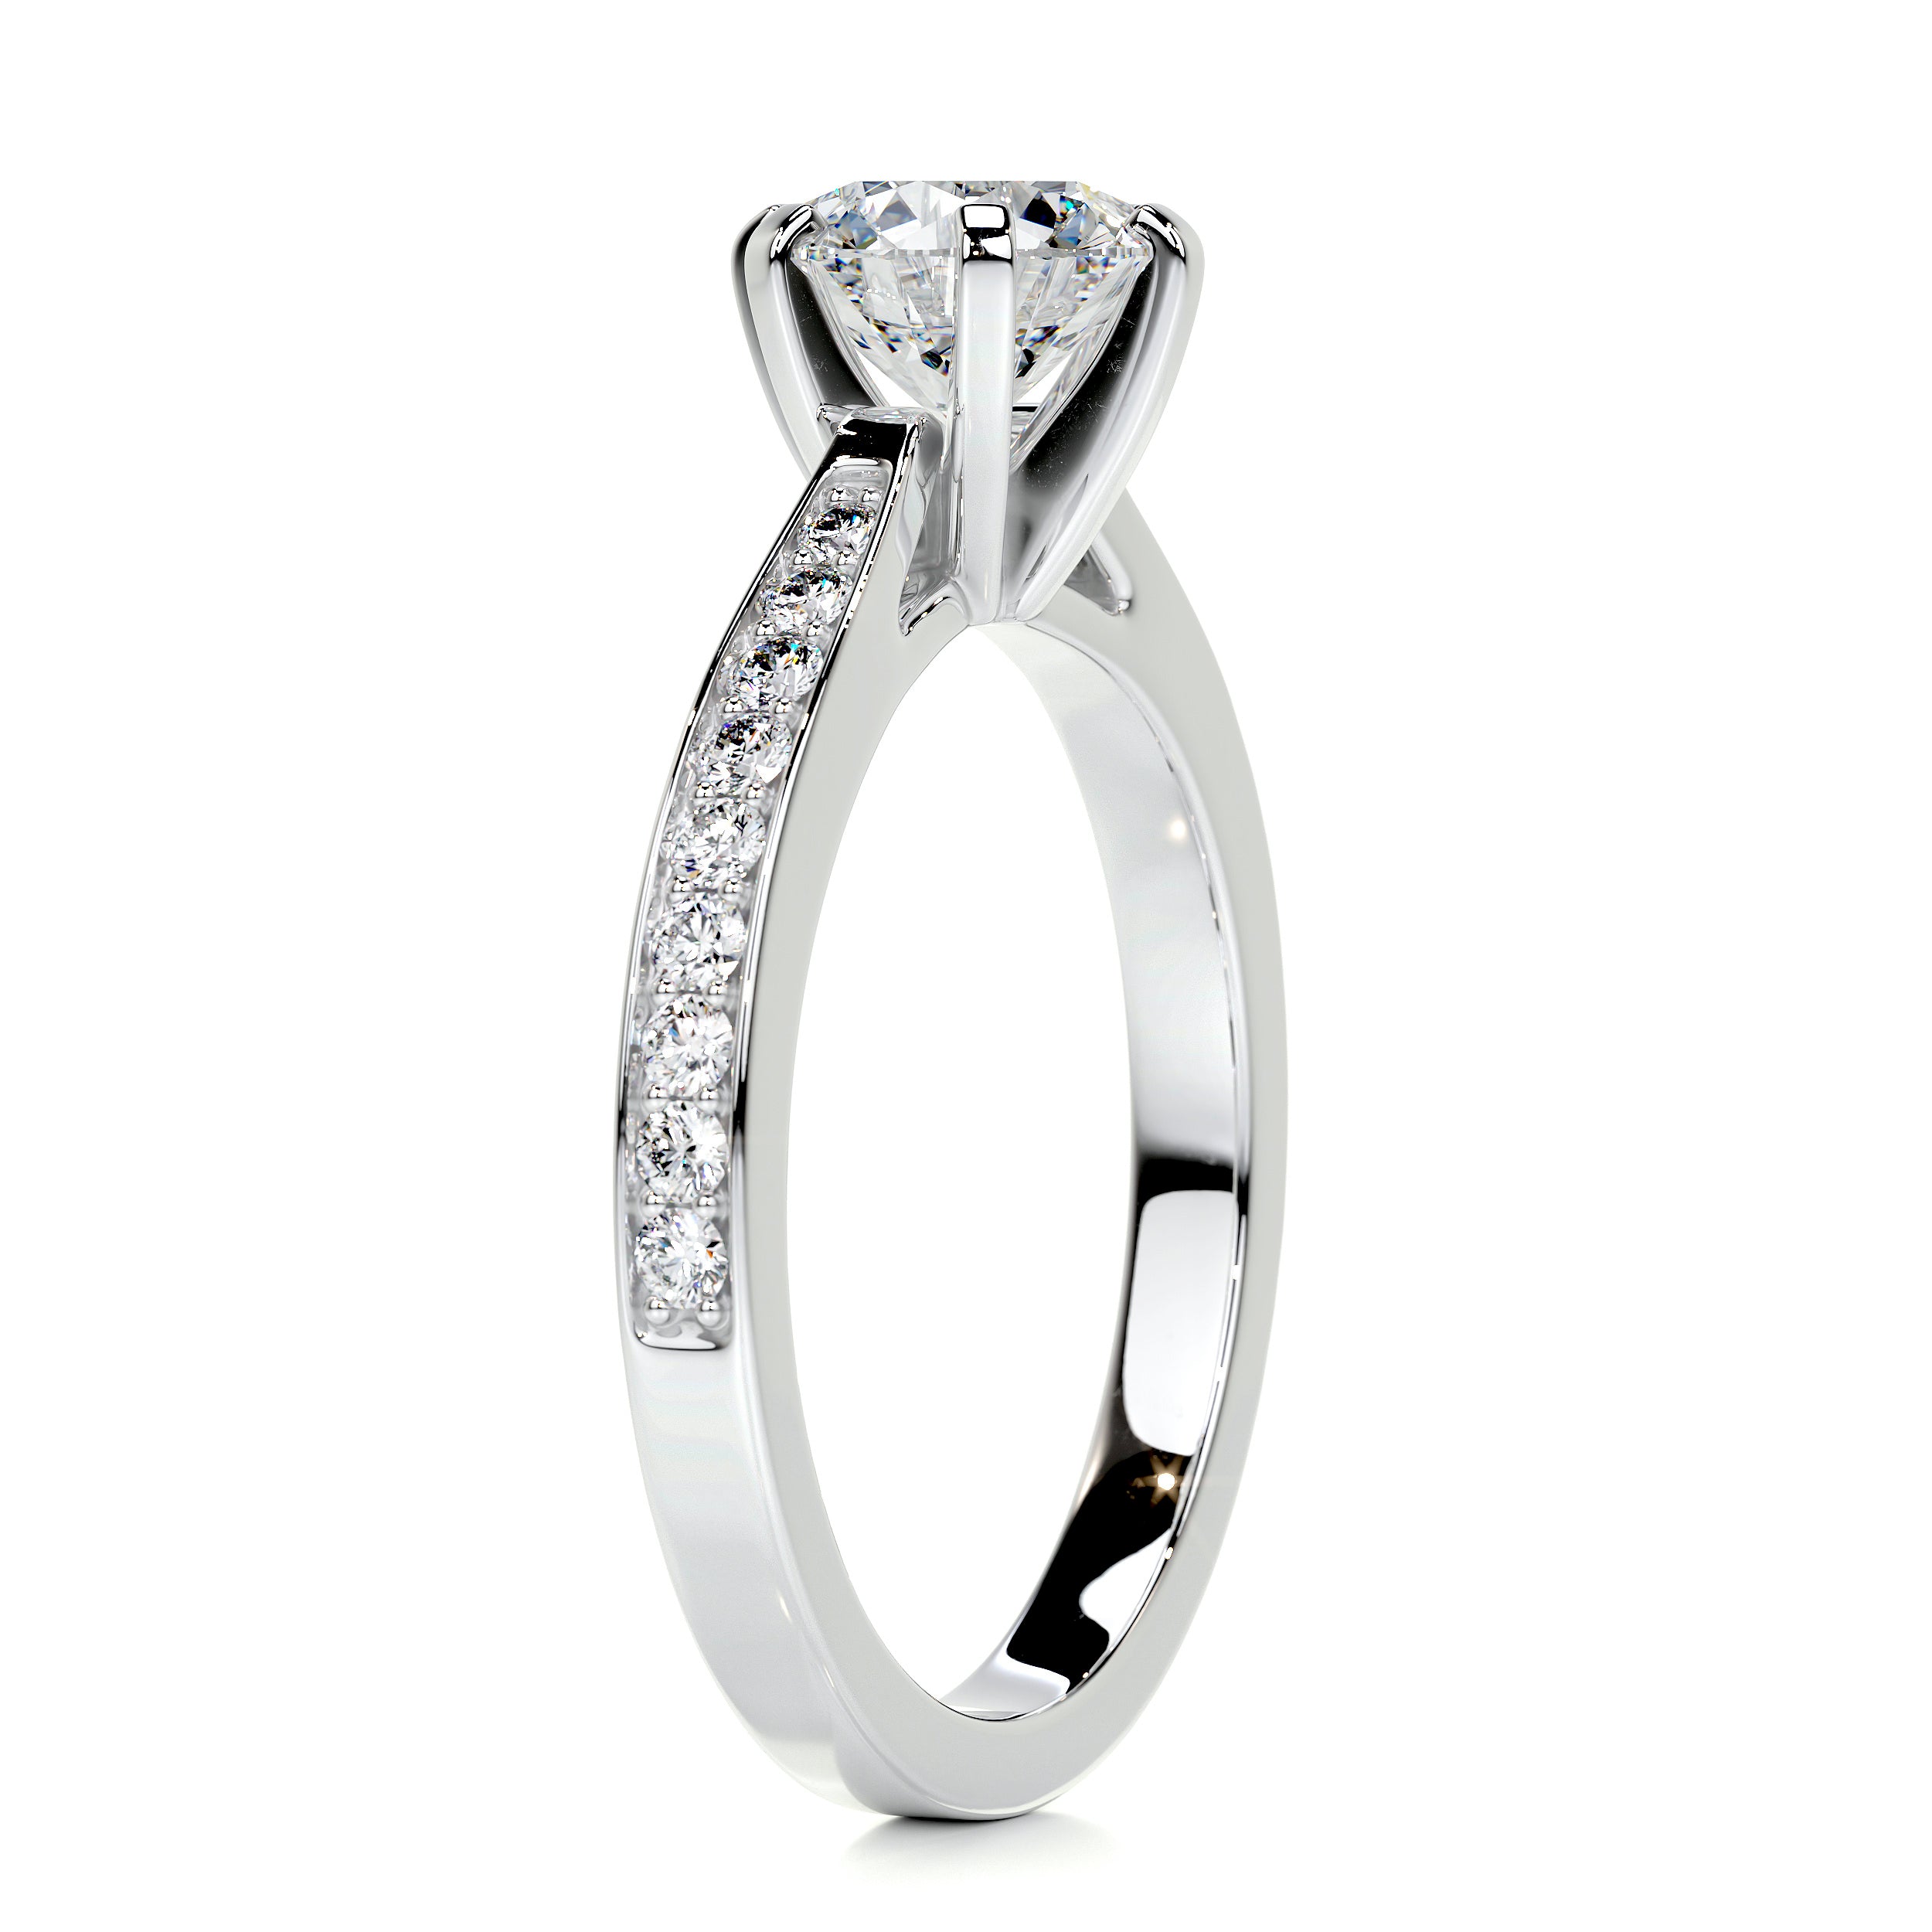 Talia Diamond Engagement Ring   (1.2 Carat) - 18K White Gold